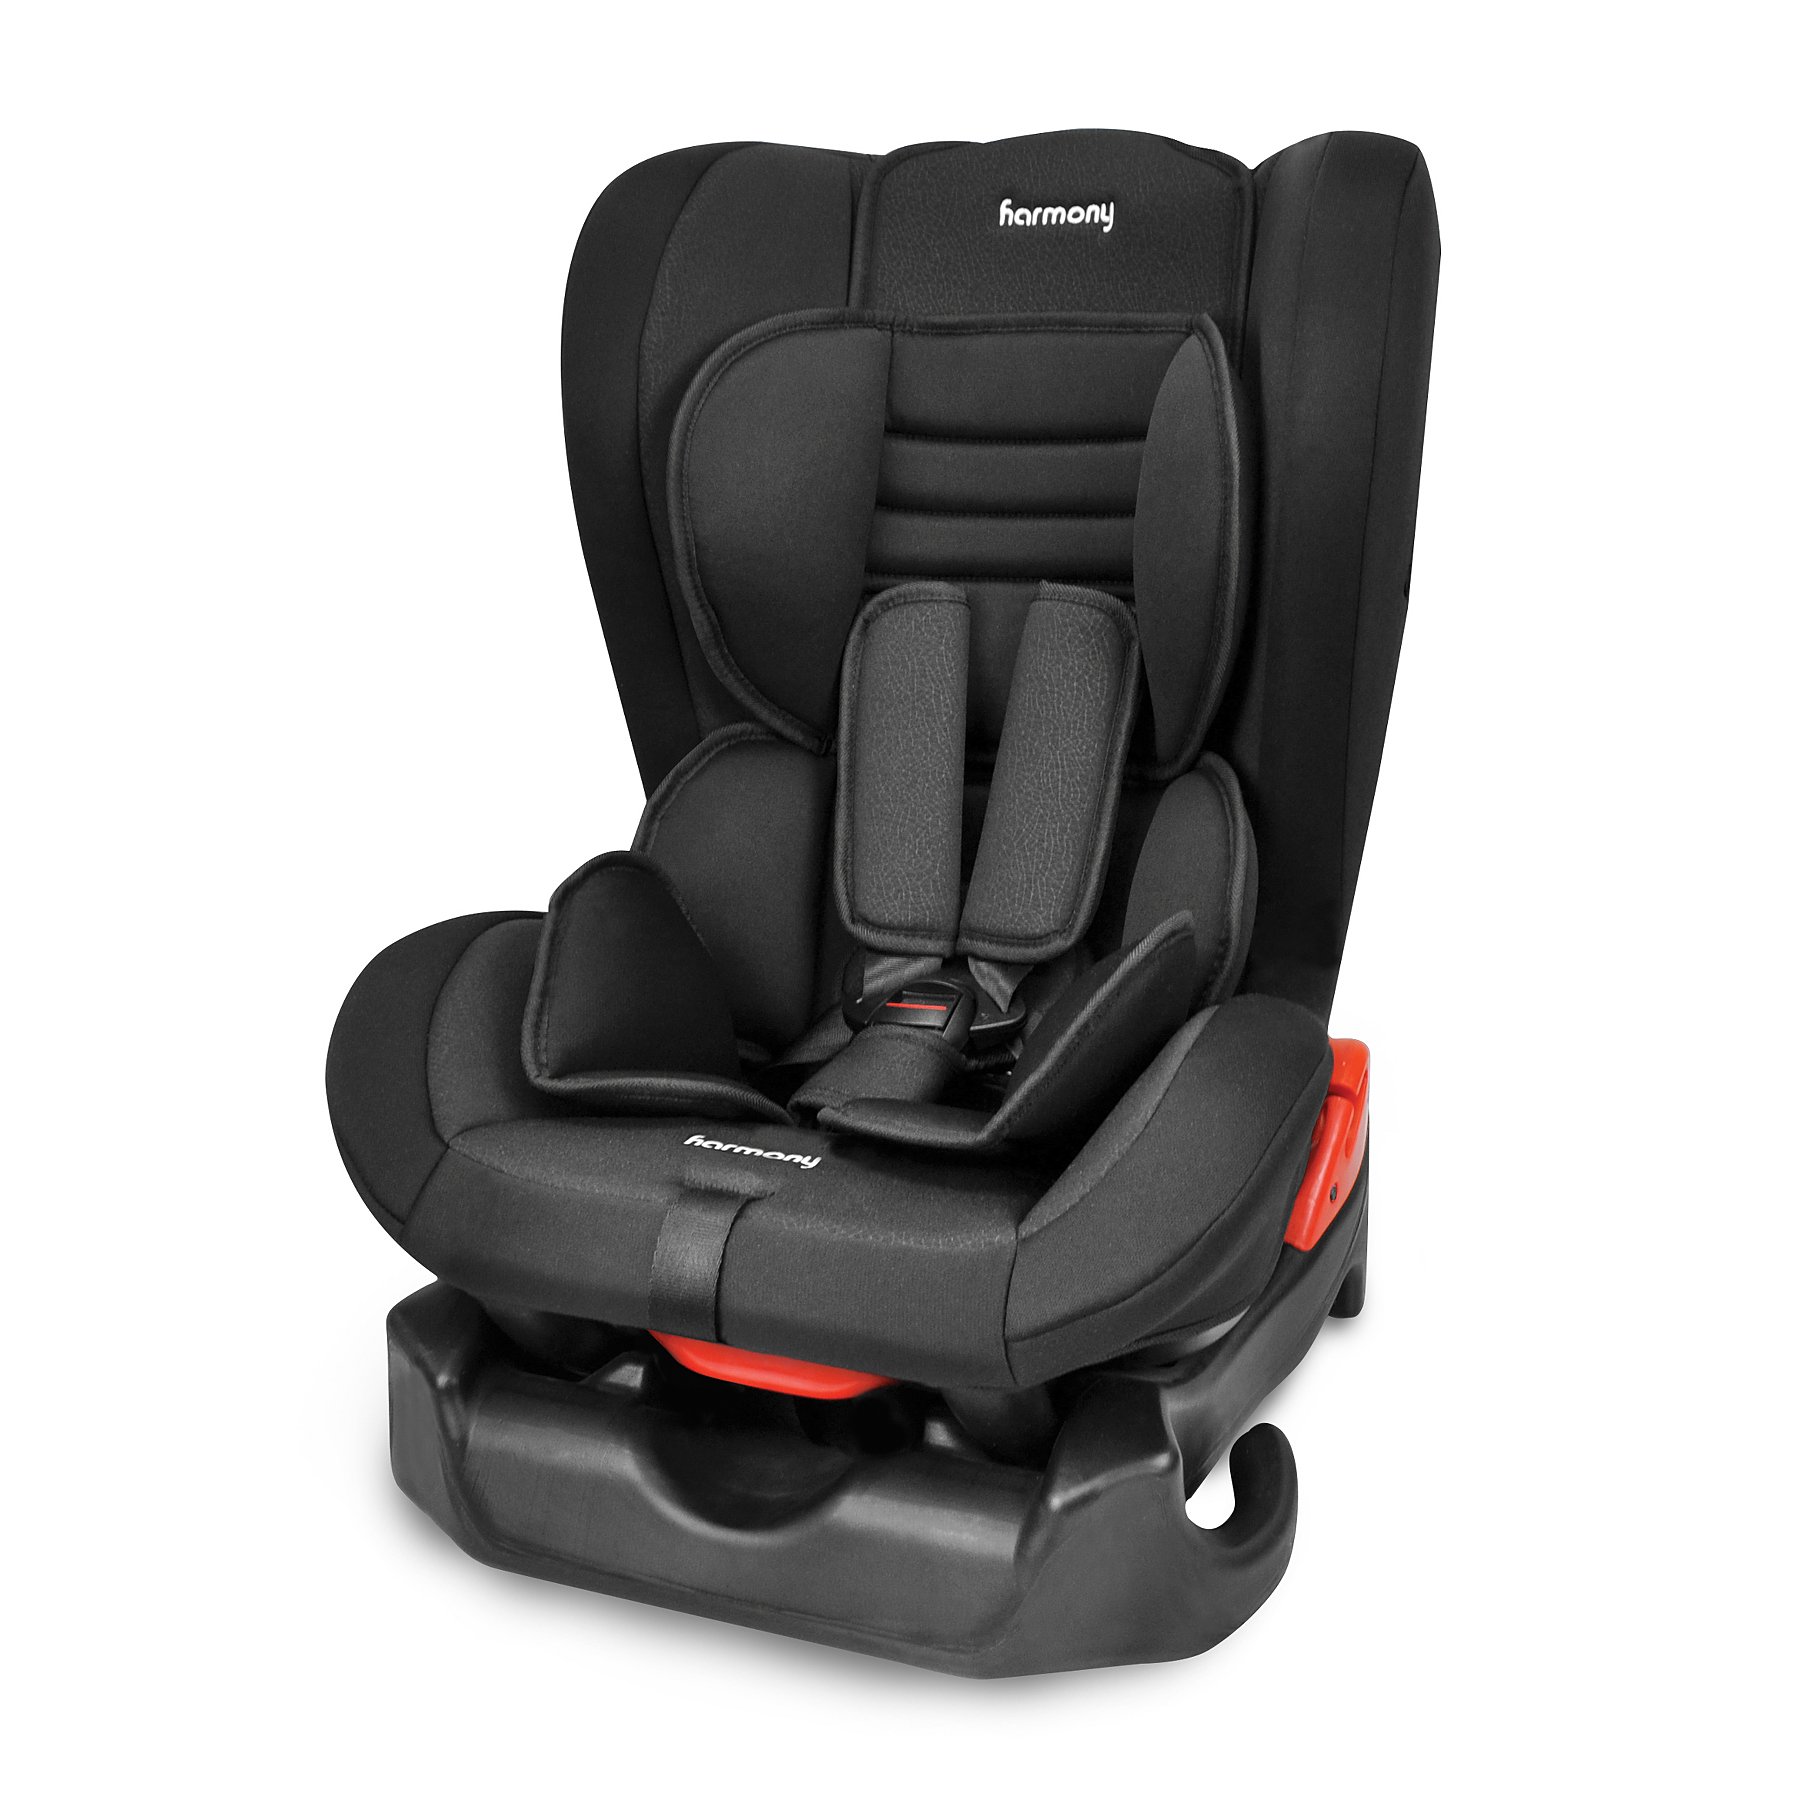 Merydian 2 In 1 Convertible Car Seat, What Group Child Car Seat